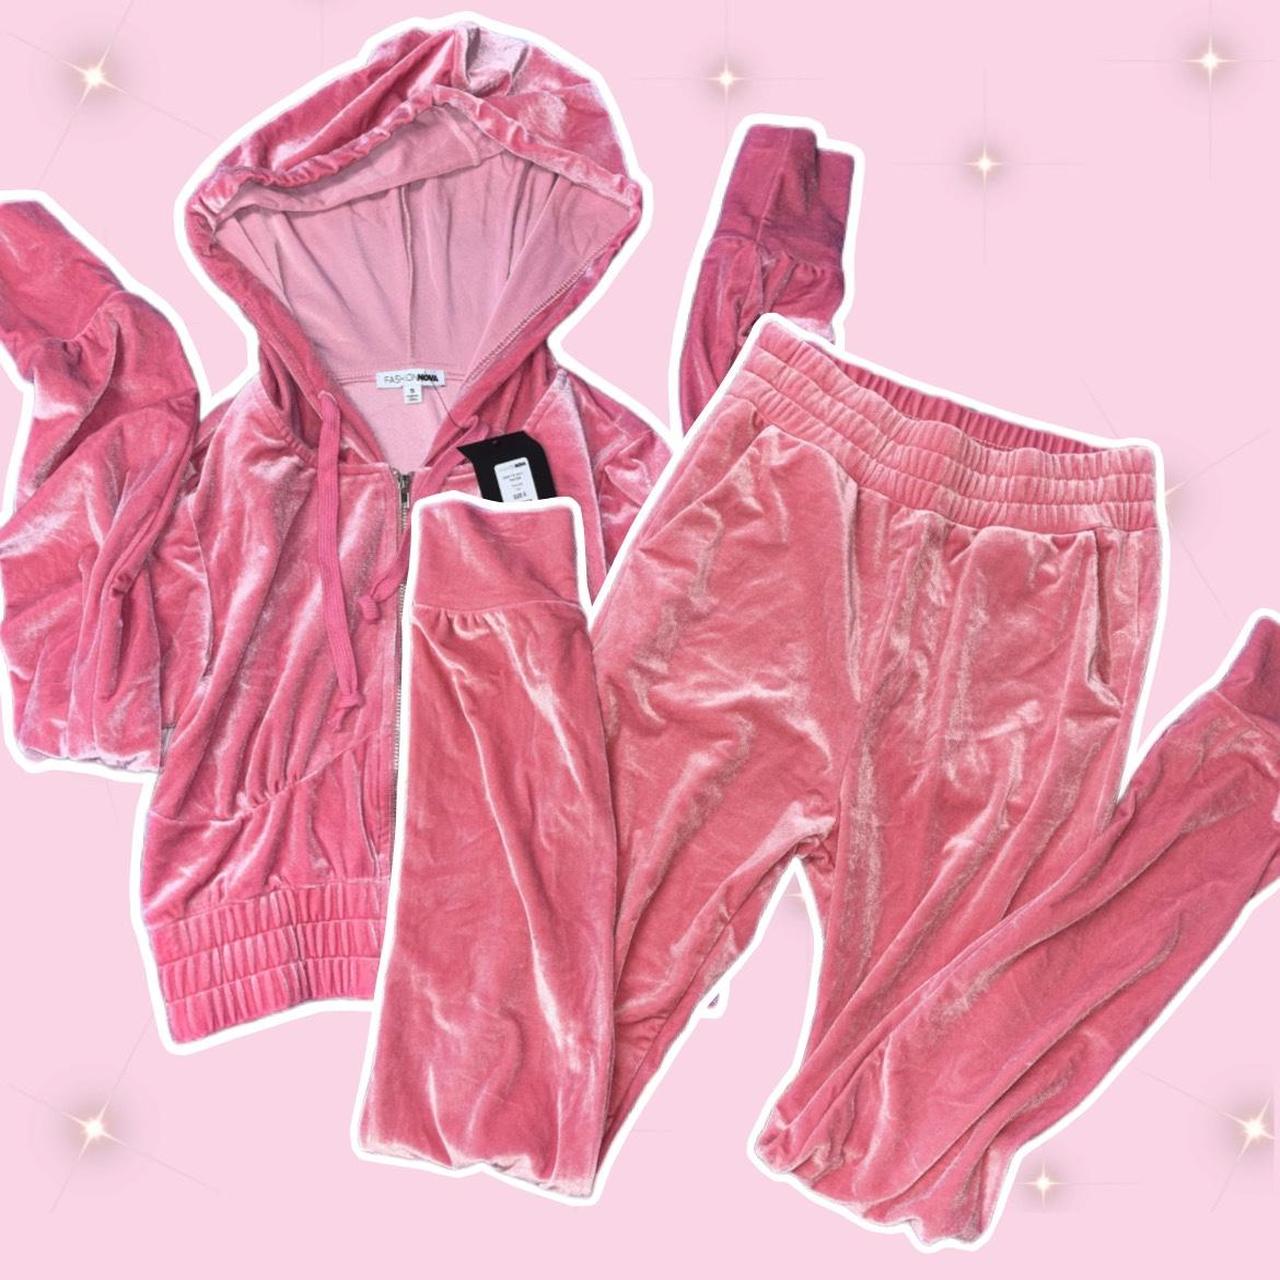 Fashion Nova Women's Pink Suit